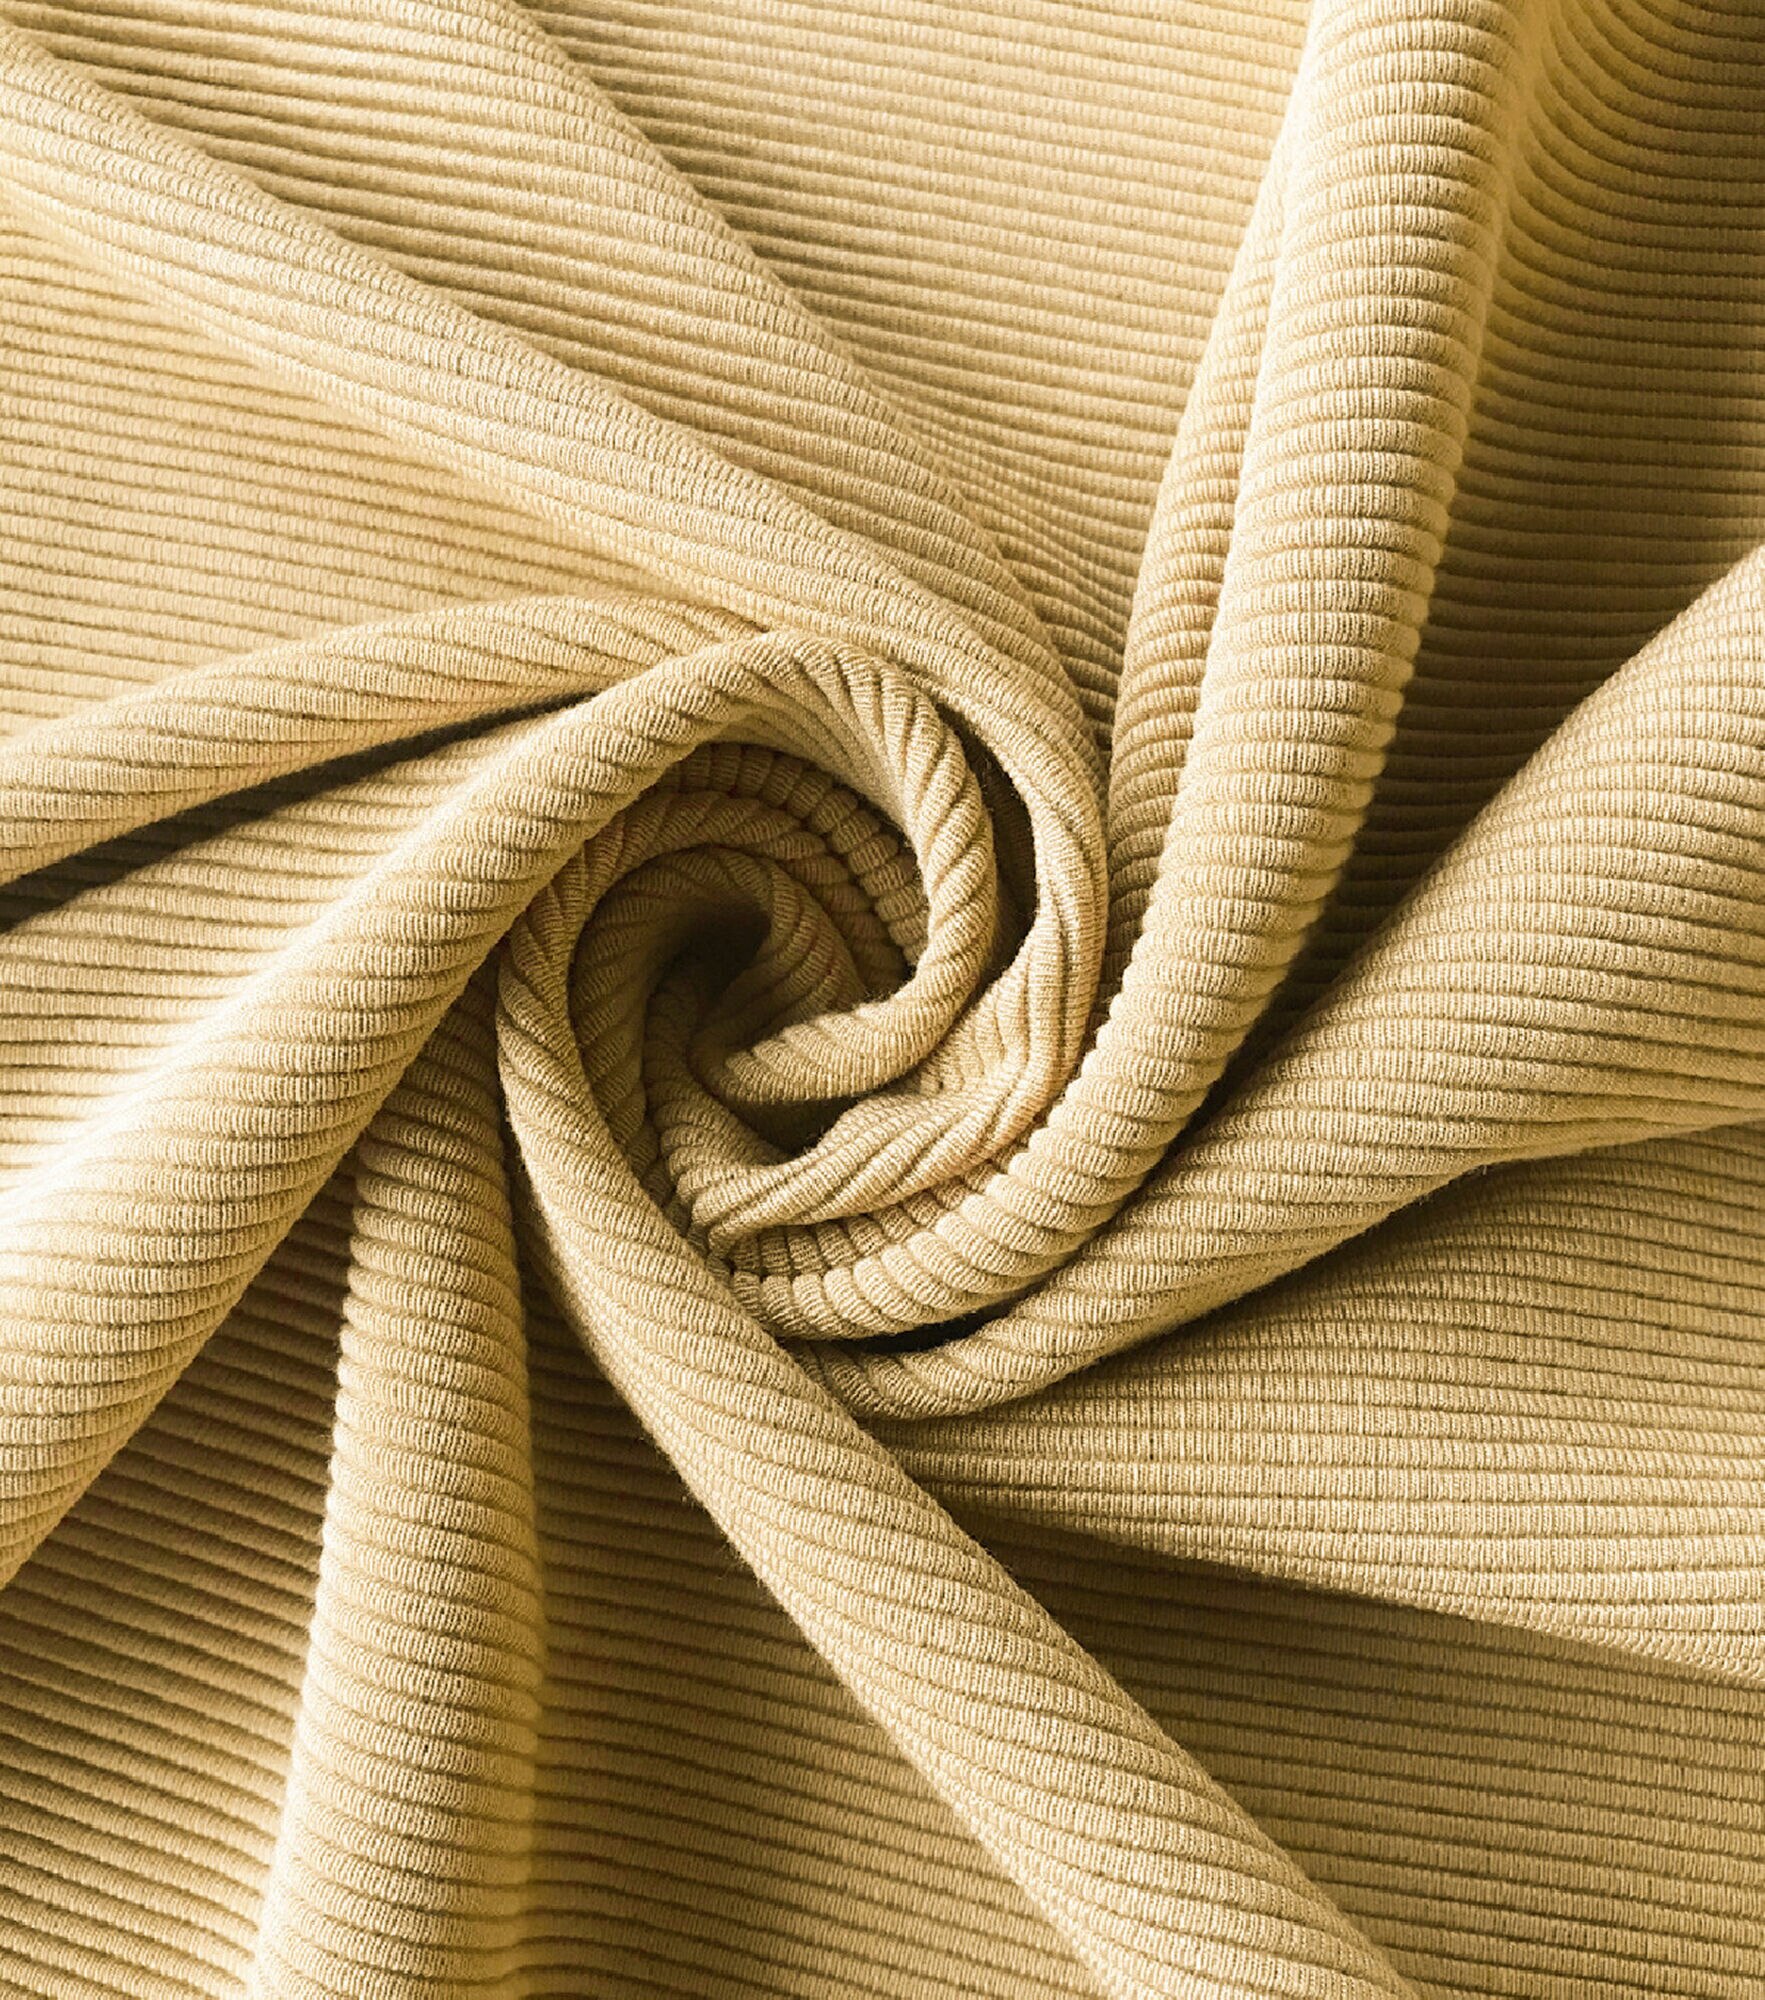 Ribbed Knit - Knits - Fabric